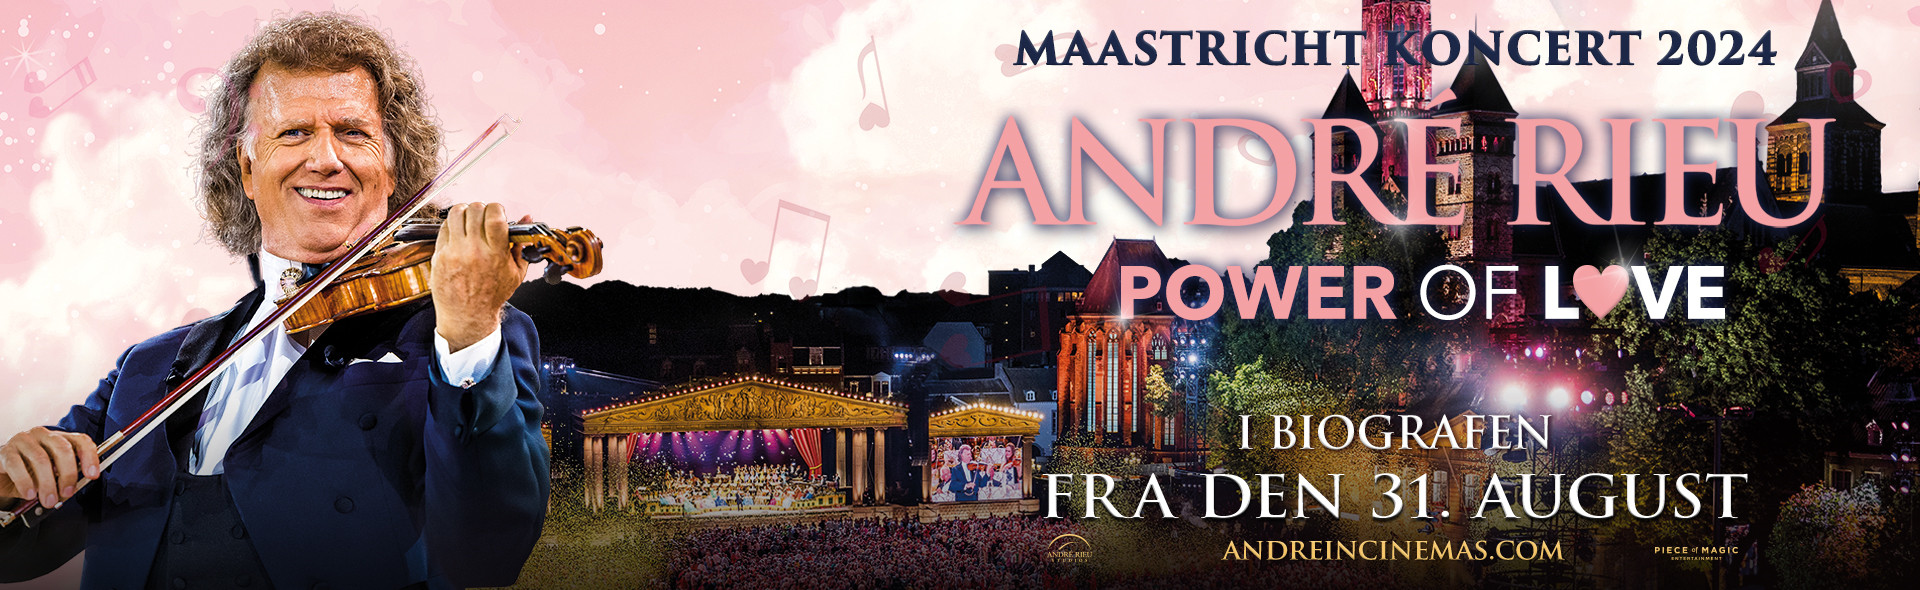 André Rieus 2024 Maastricht Concert: Power of Love_slide_poster